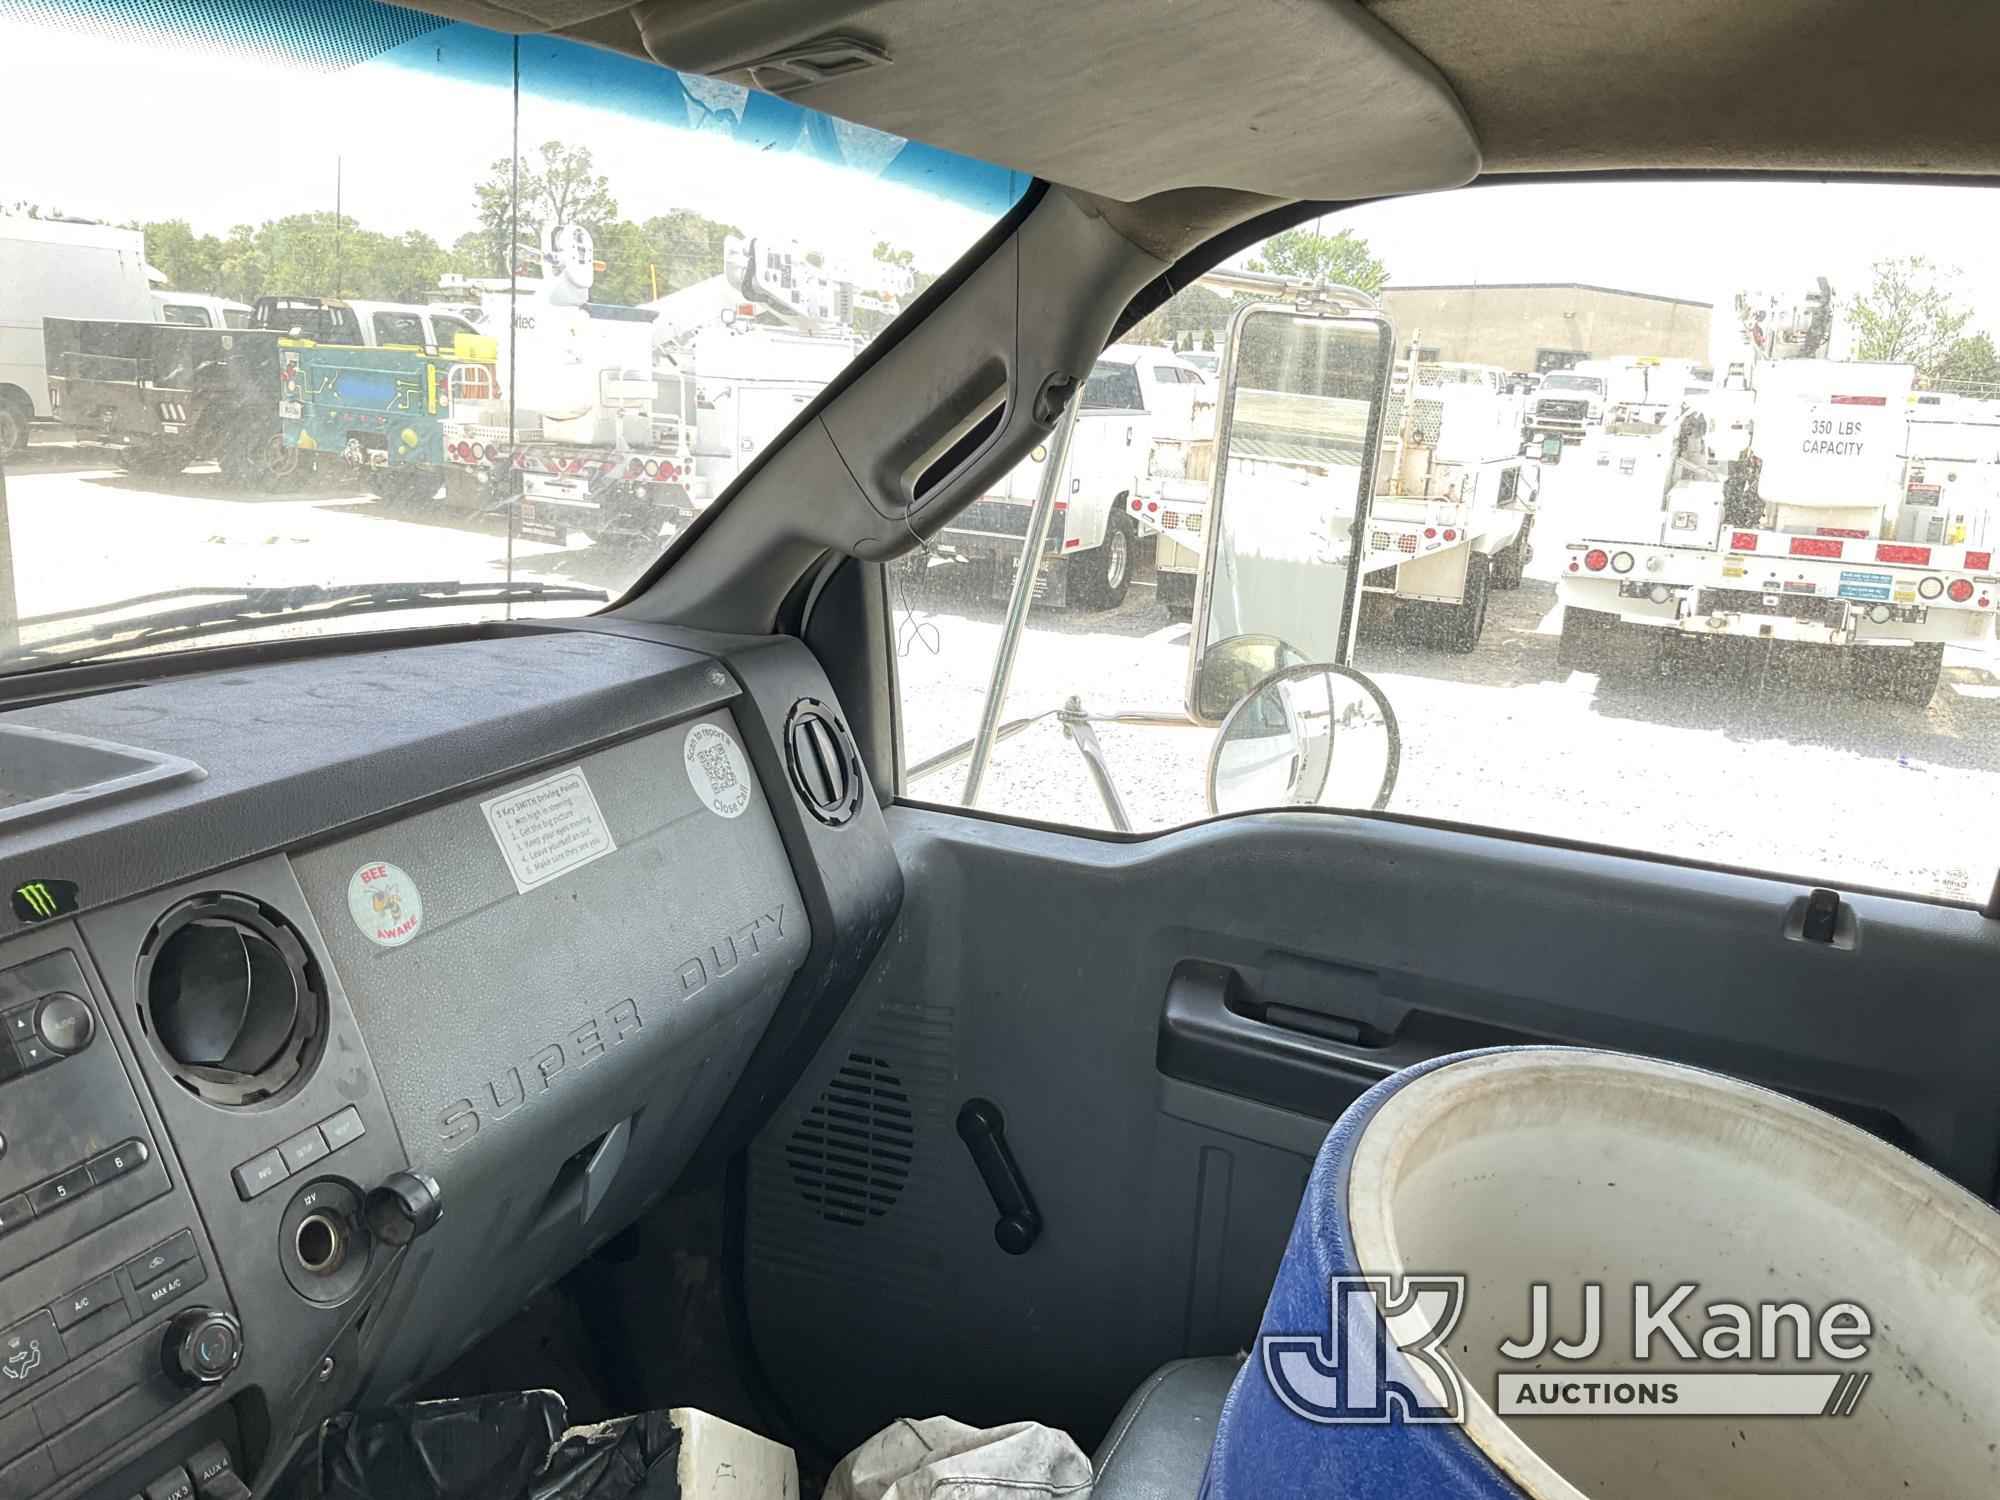 (Villa Rica, GA) HiRanger/Terex XT55, Over-Center Bucket Truck mounted behind cab on 2013 Ford F750